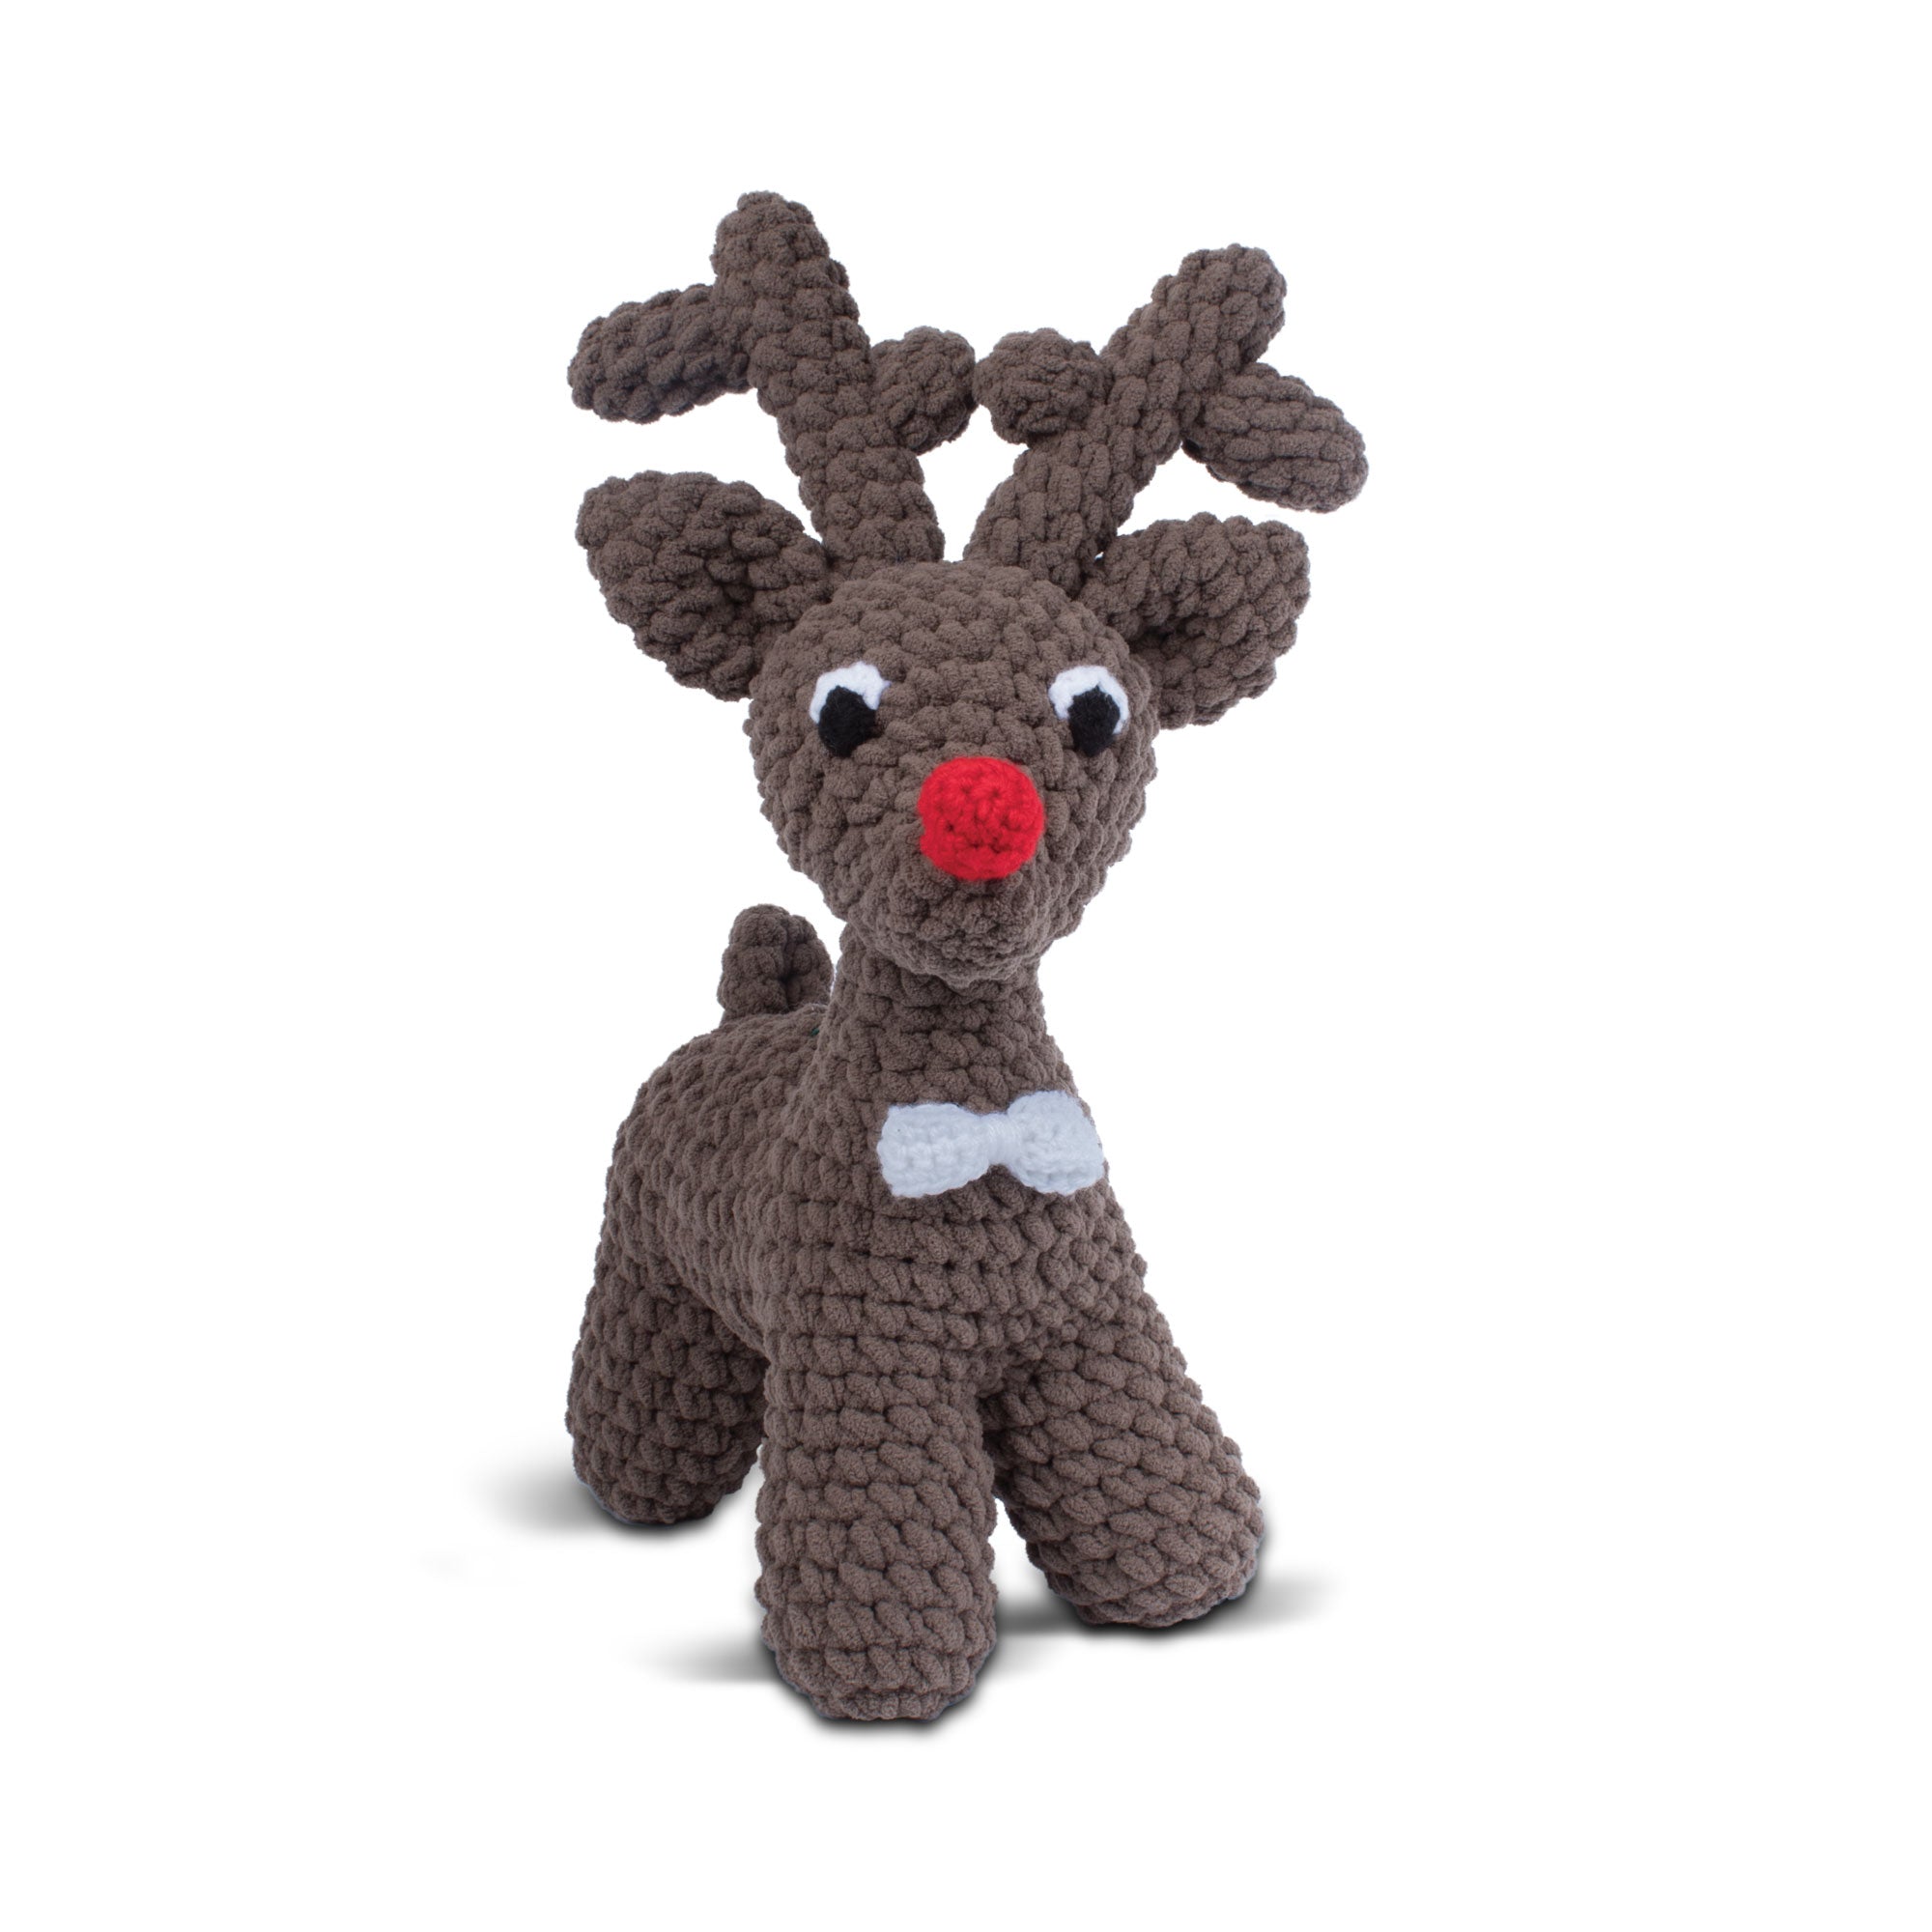 Knitty Critters Crochet Kit – Roody Reindeer